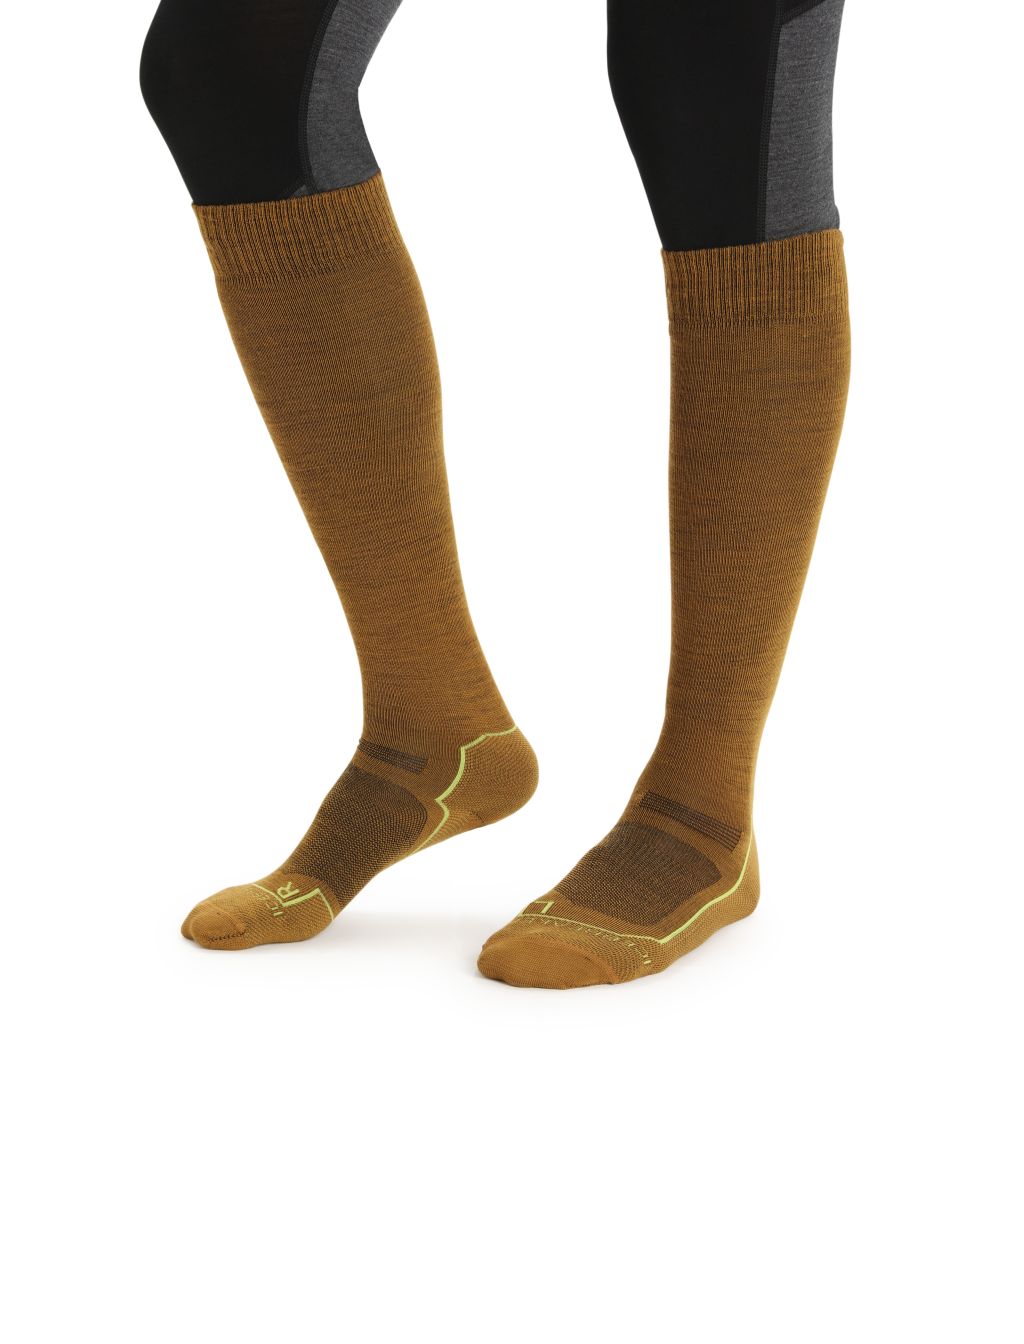 Pánské ponožky ICEBREAKER Mens Ski+ Ultralight OTC, Clove/Silent Gold/Shine velikost: S